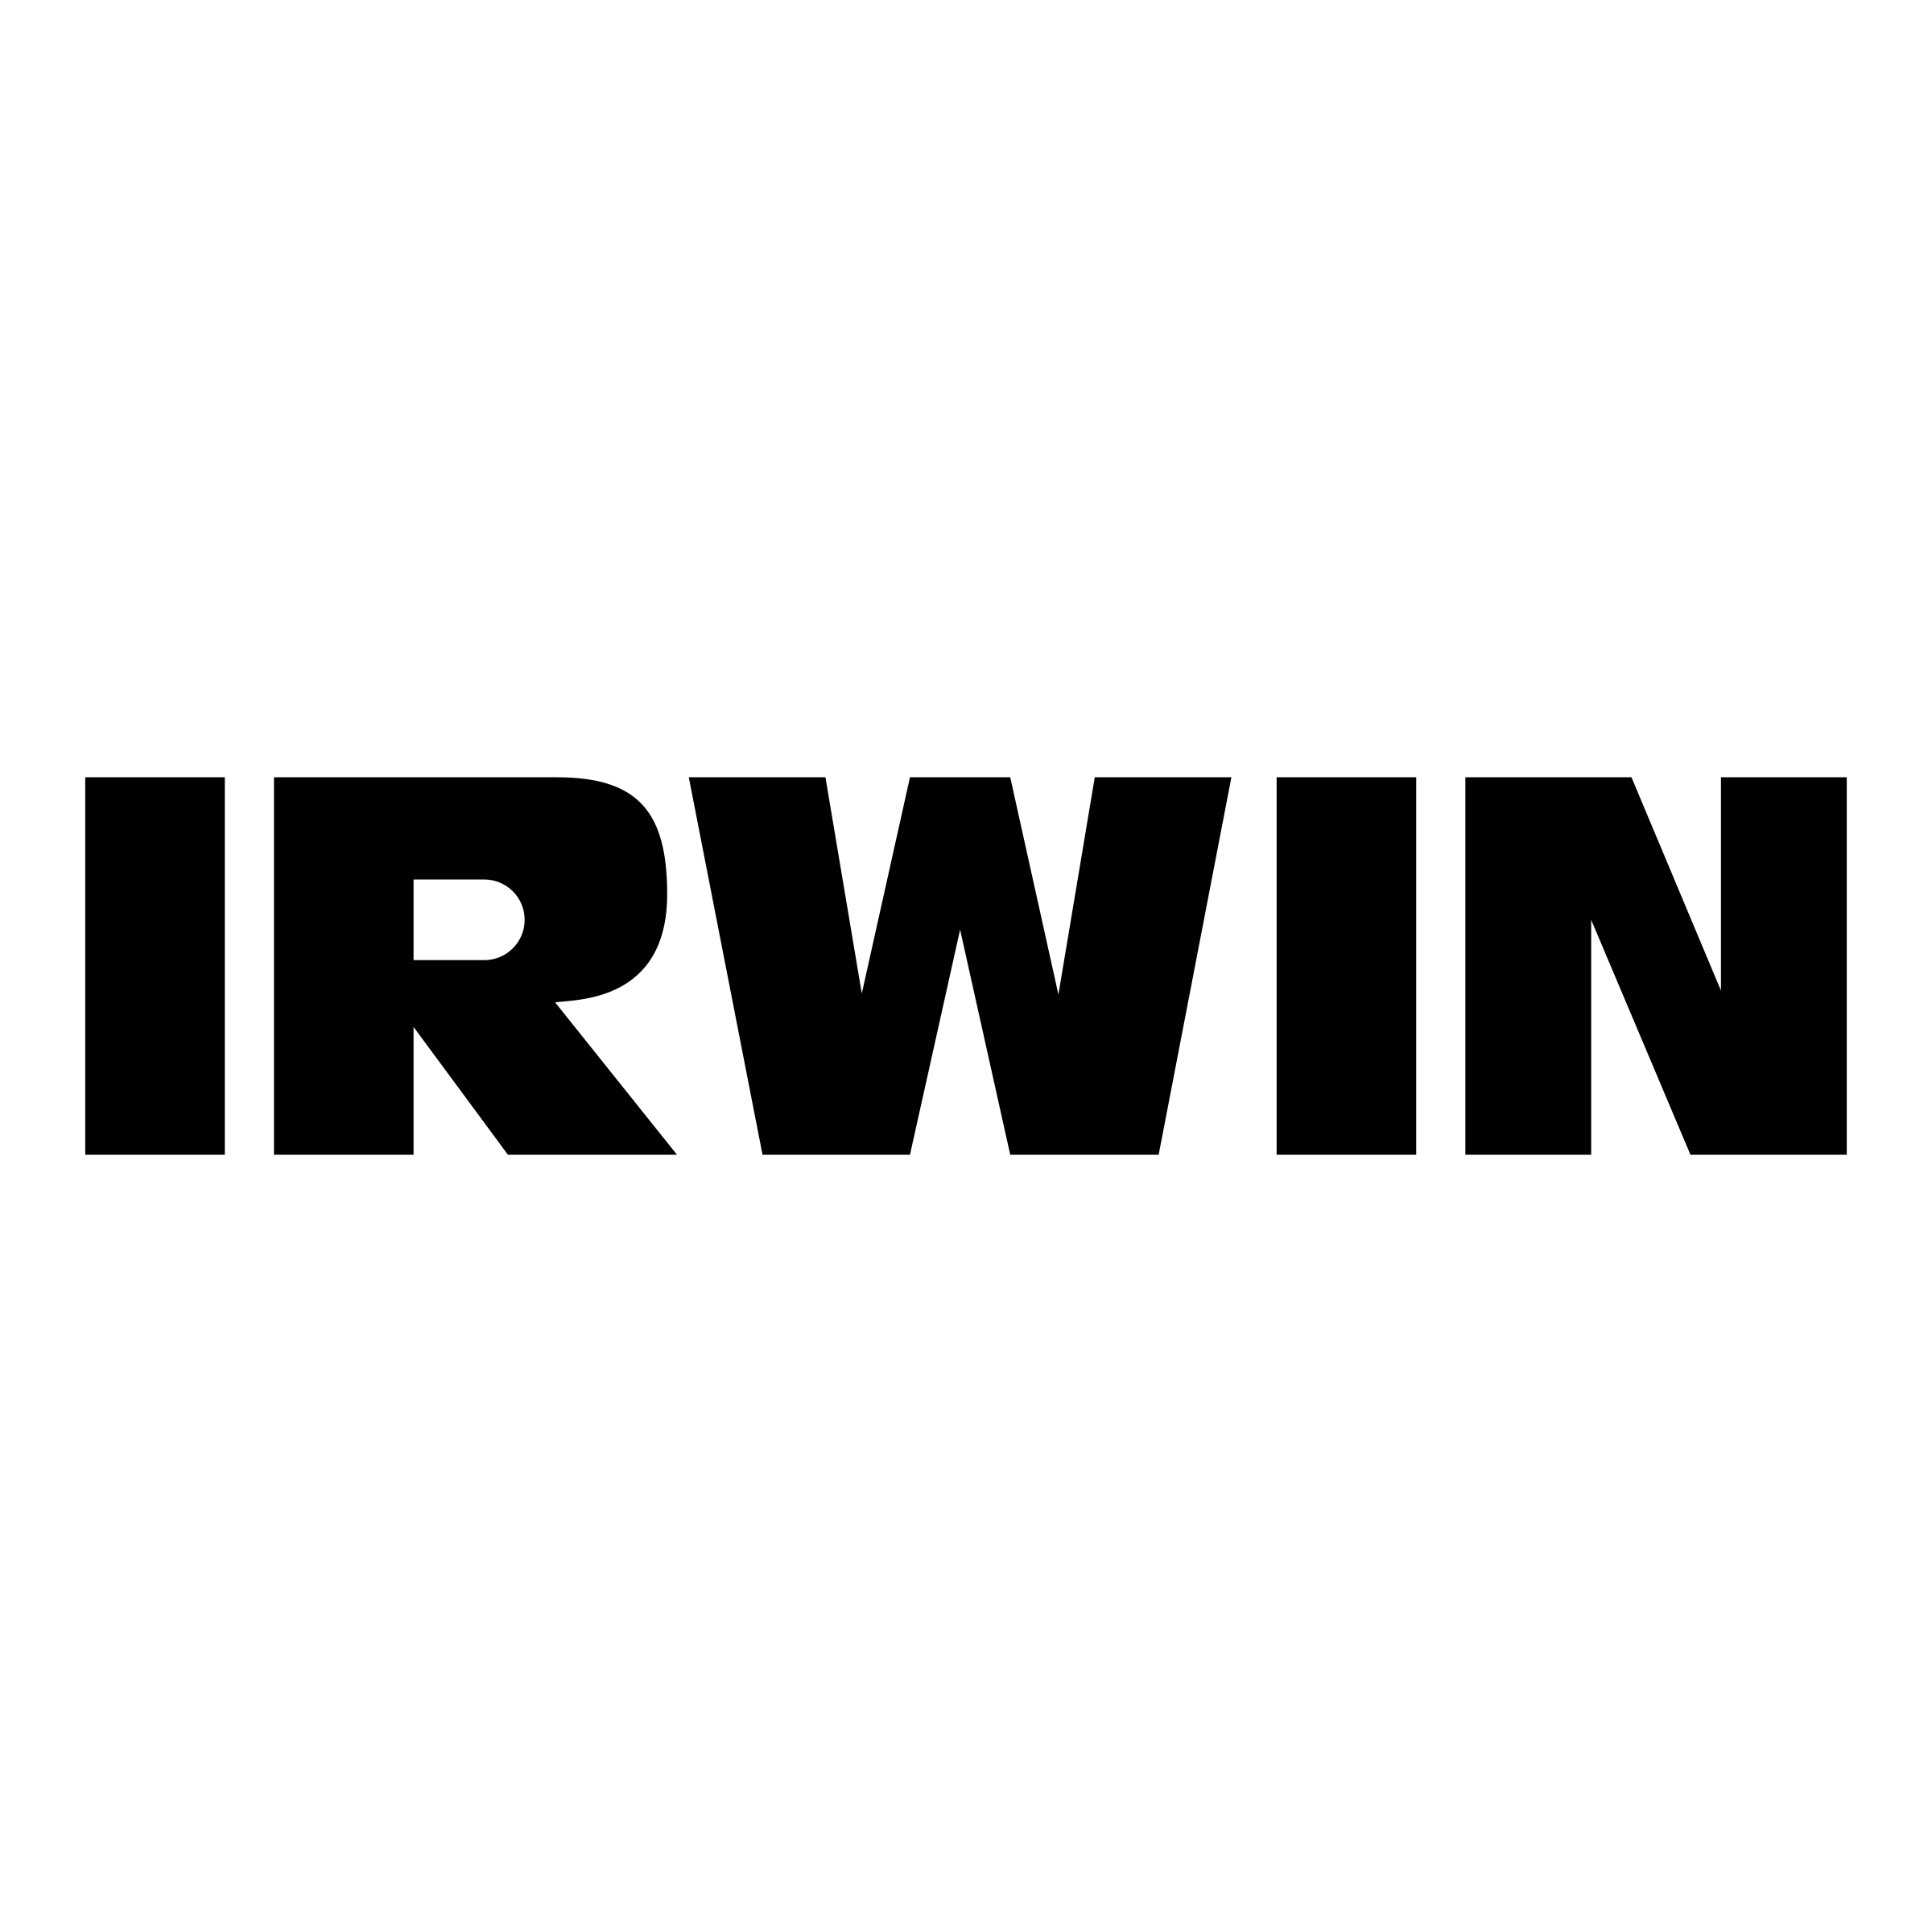 Irwin Logo - Irwin Logo PNG Transparent & SVG Vector - Freebie Supply